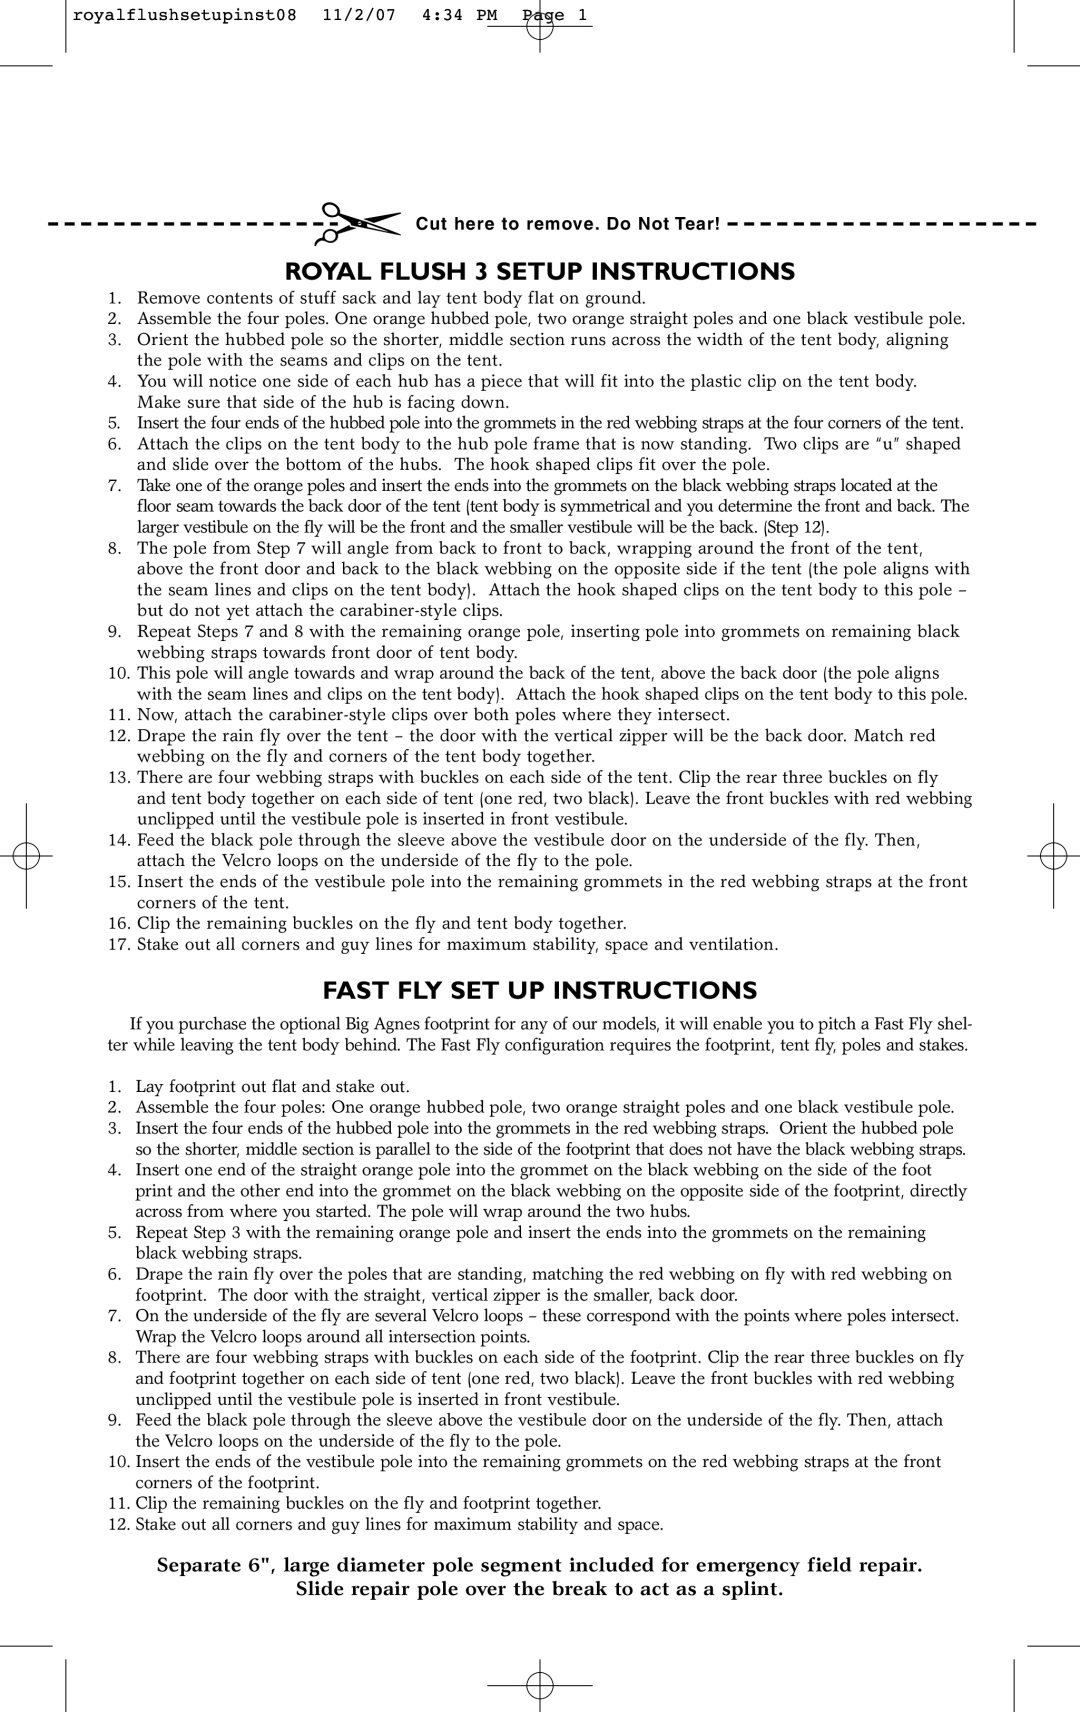 Big Agnes Royal Flush 3 manual ROYAL FLUSH 3 SETUP INSTRUCTIONS, Fast Fly Set Up Instructions 